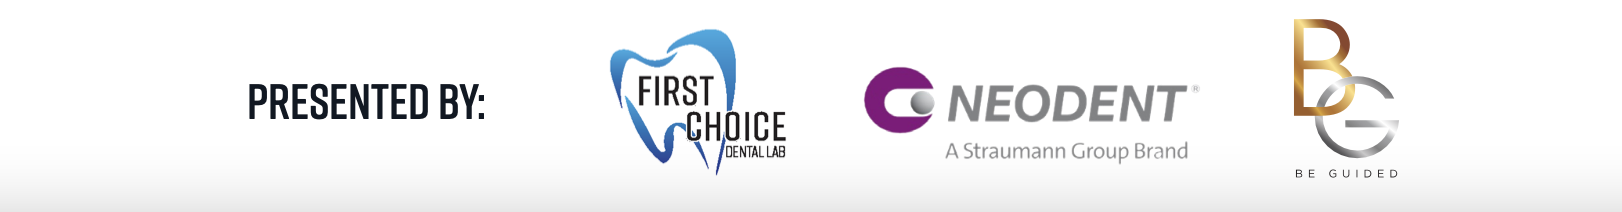 First Choice Dental Lab CE Event